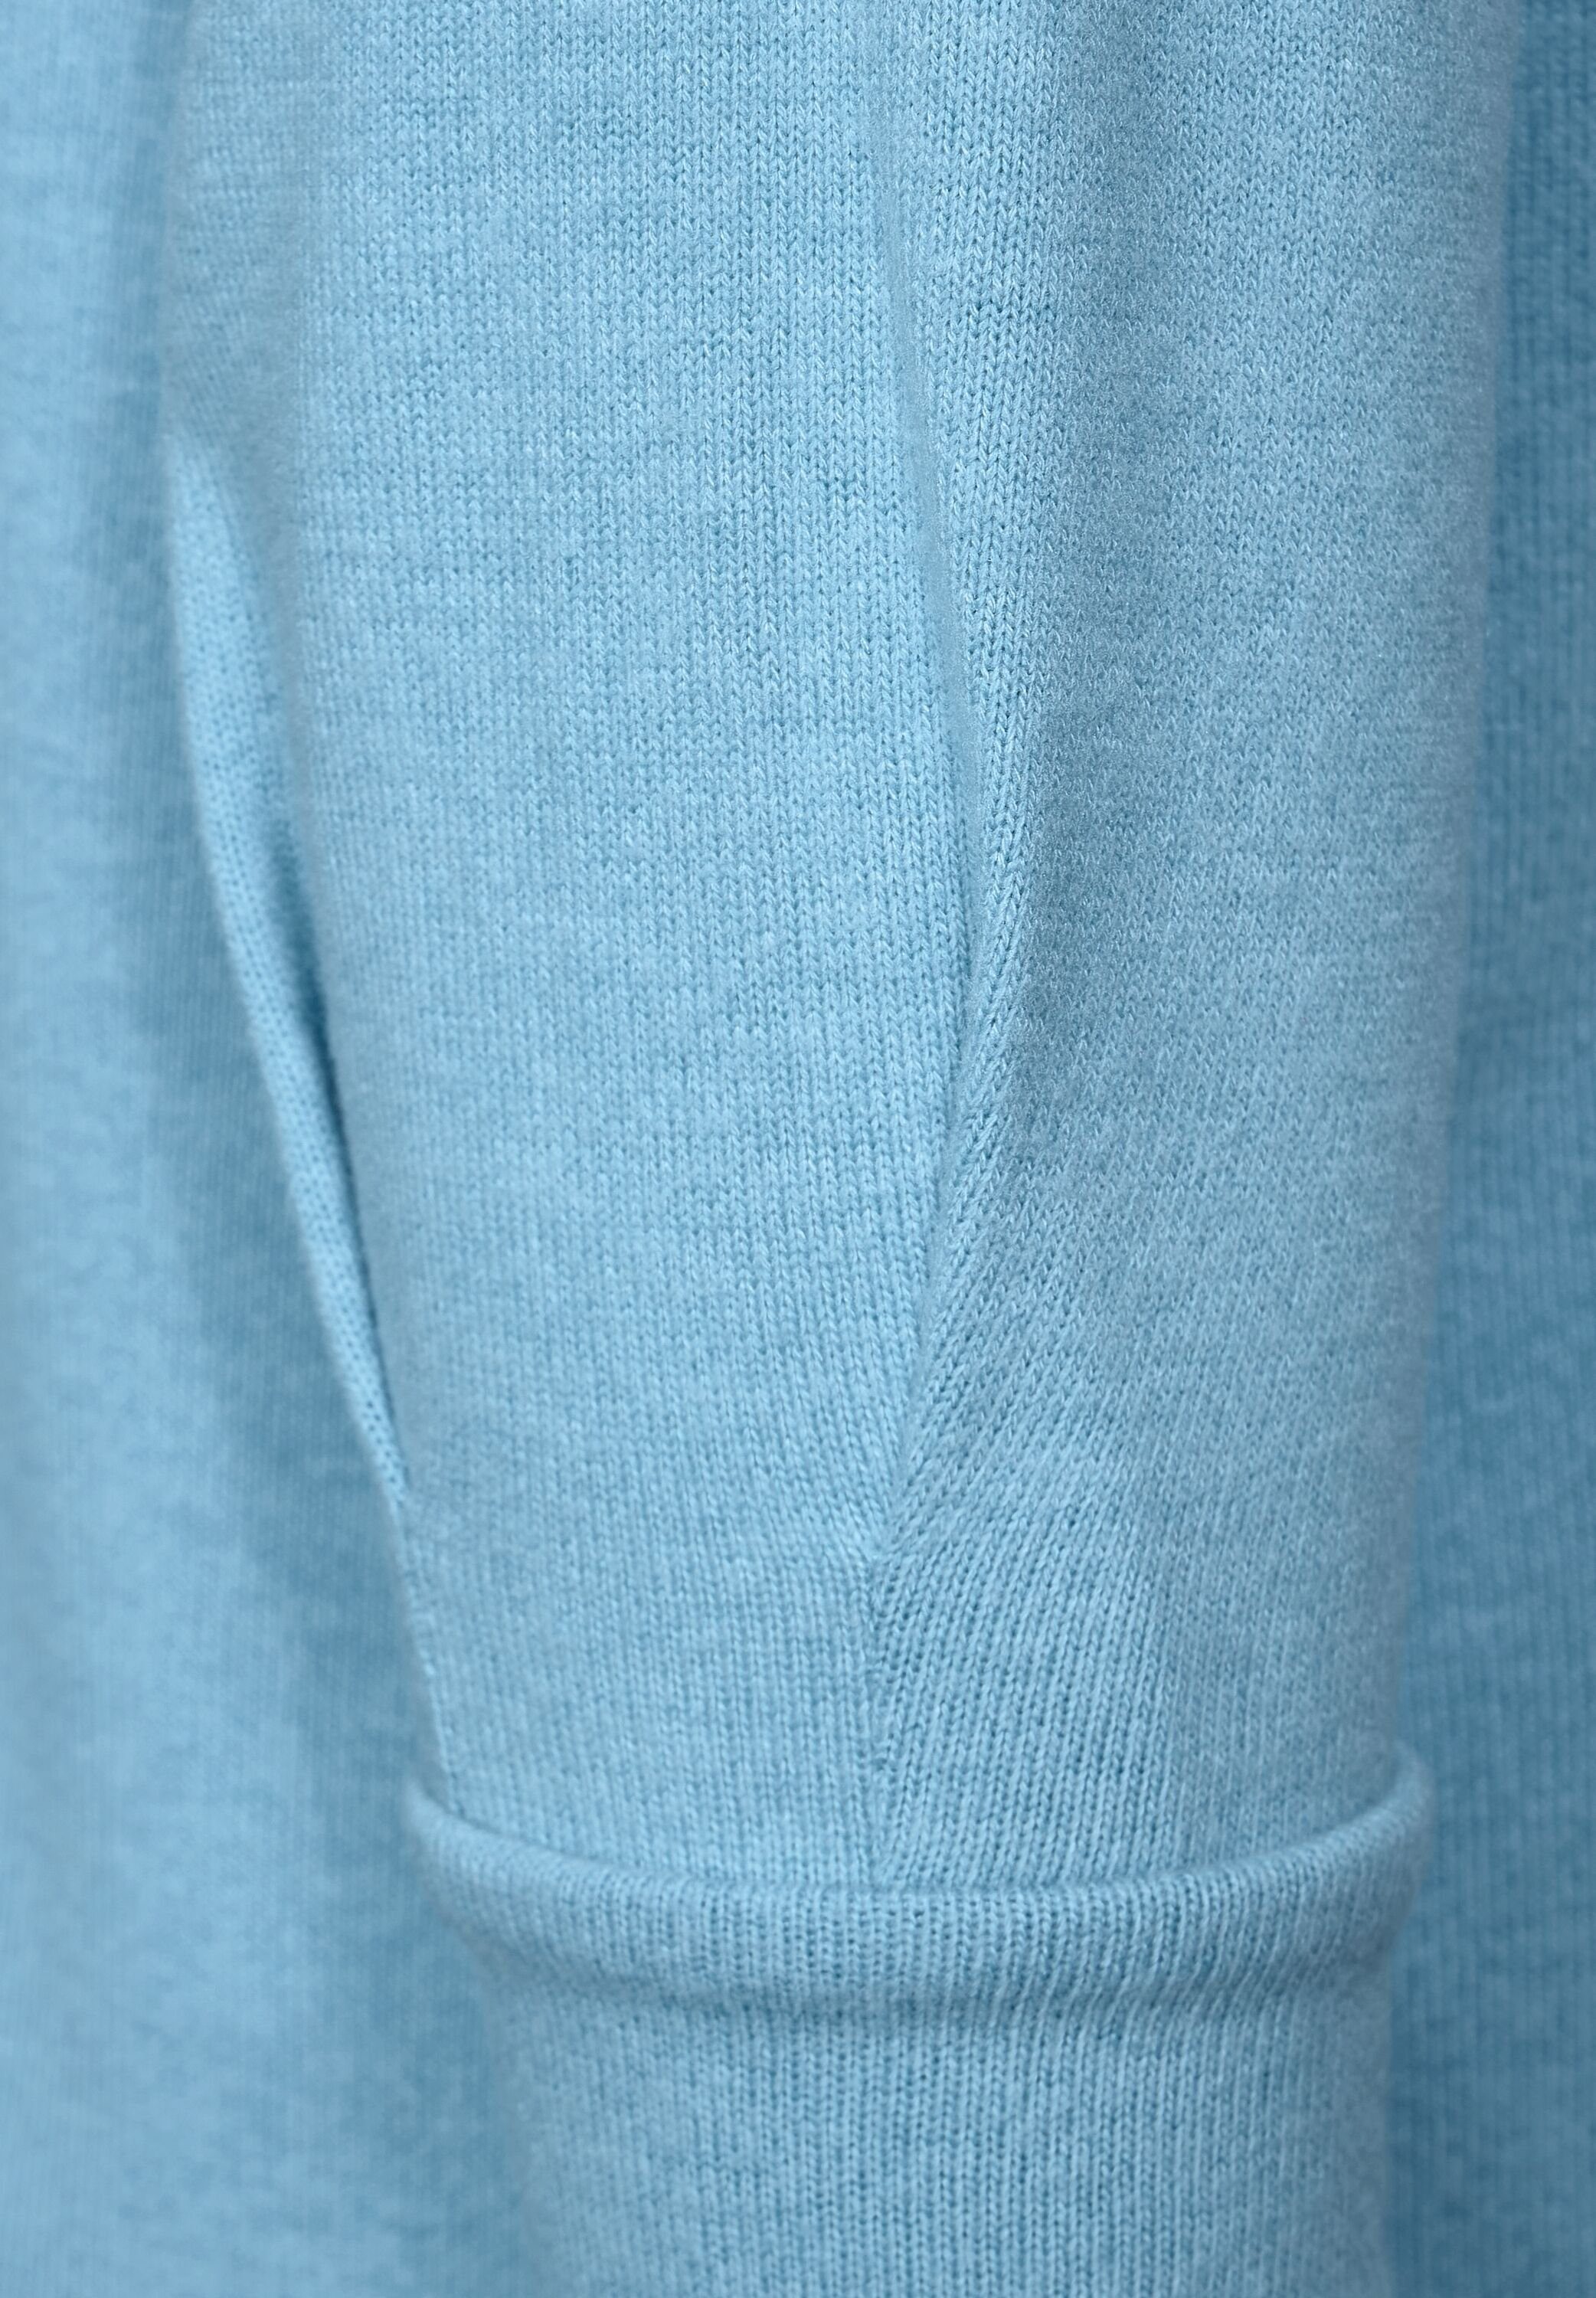 STREET ONE new Shirtjacke QR light Style im LTD blue aquamarine offenen Jacy mel. Design Shirtjacke